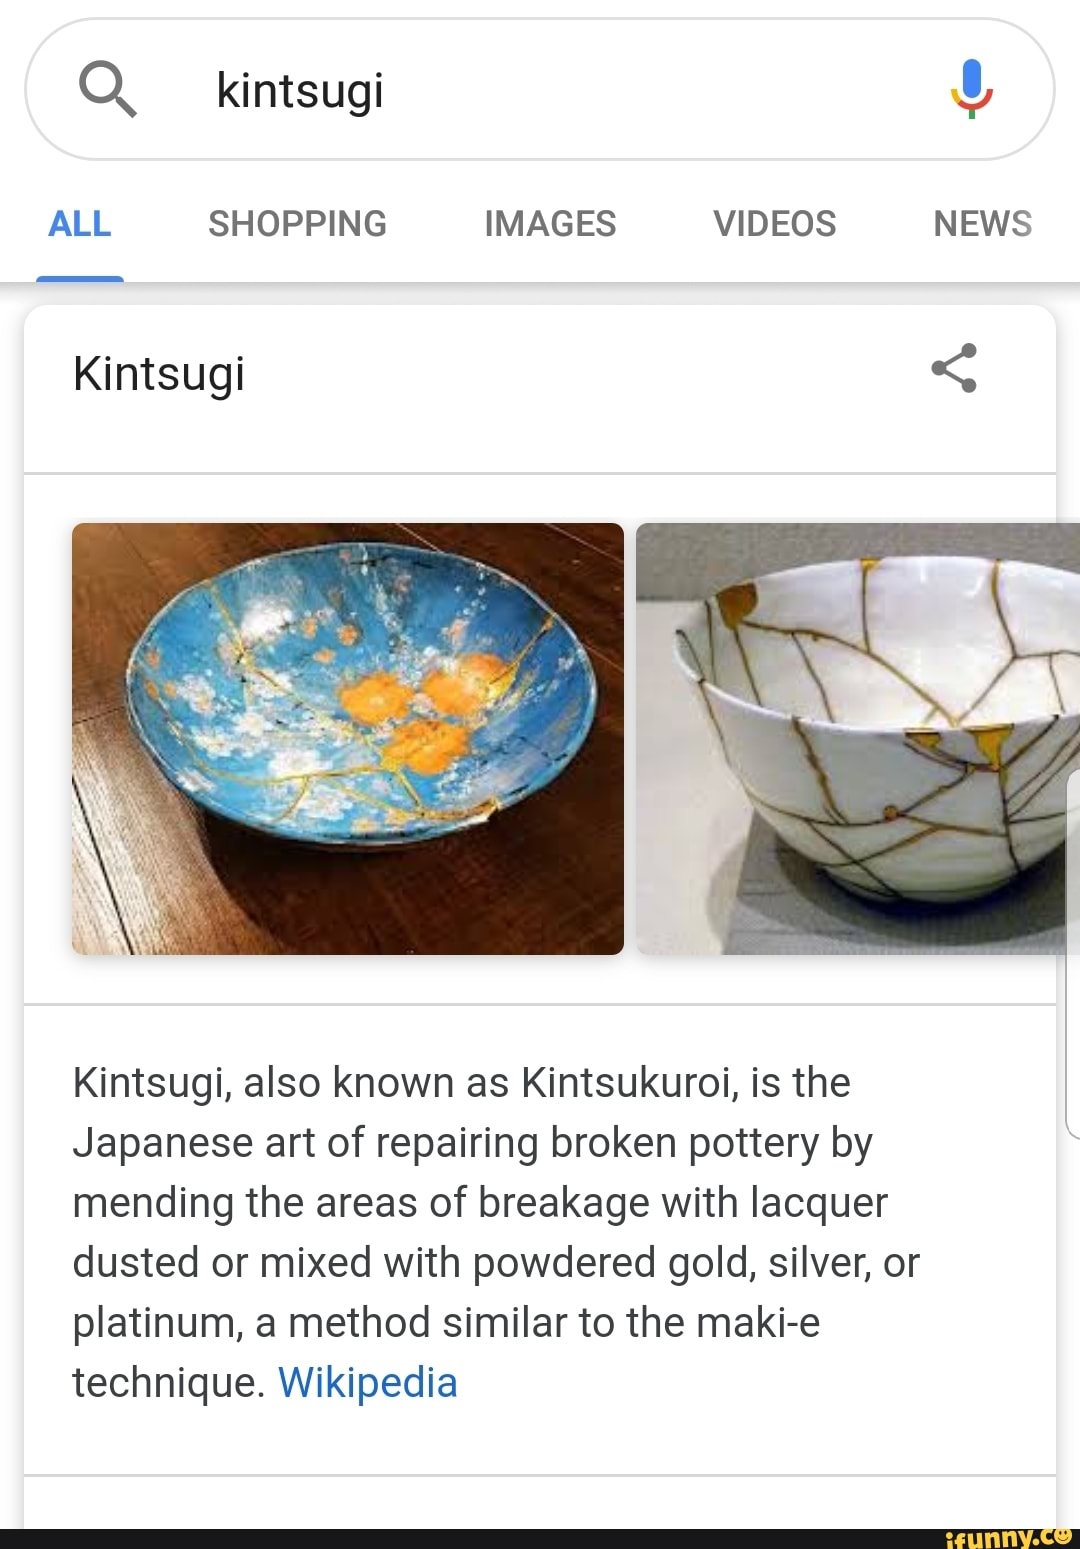 kintsugi - Kintsugi